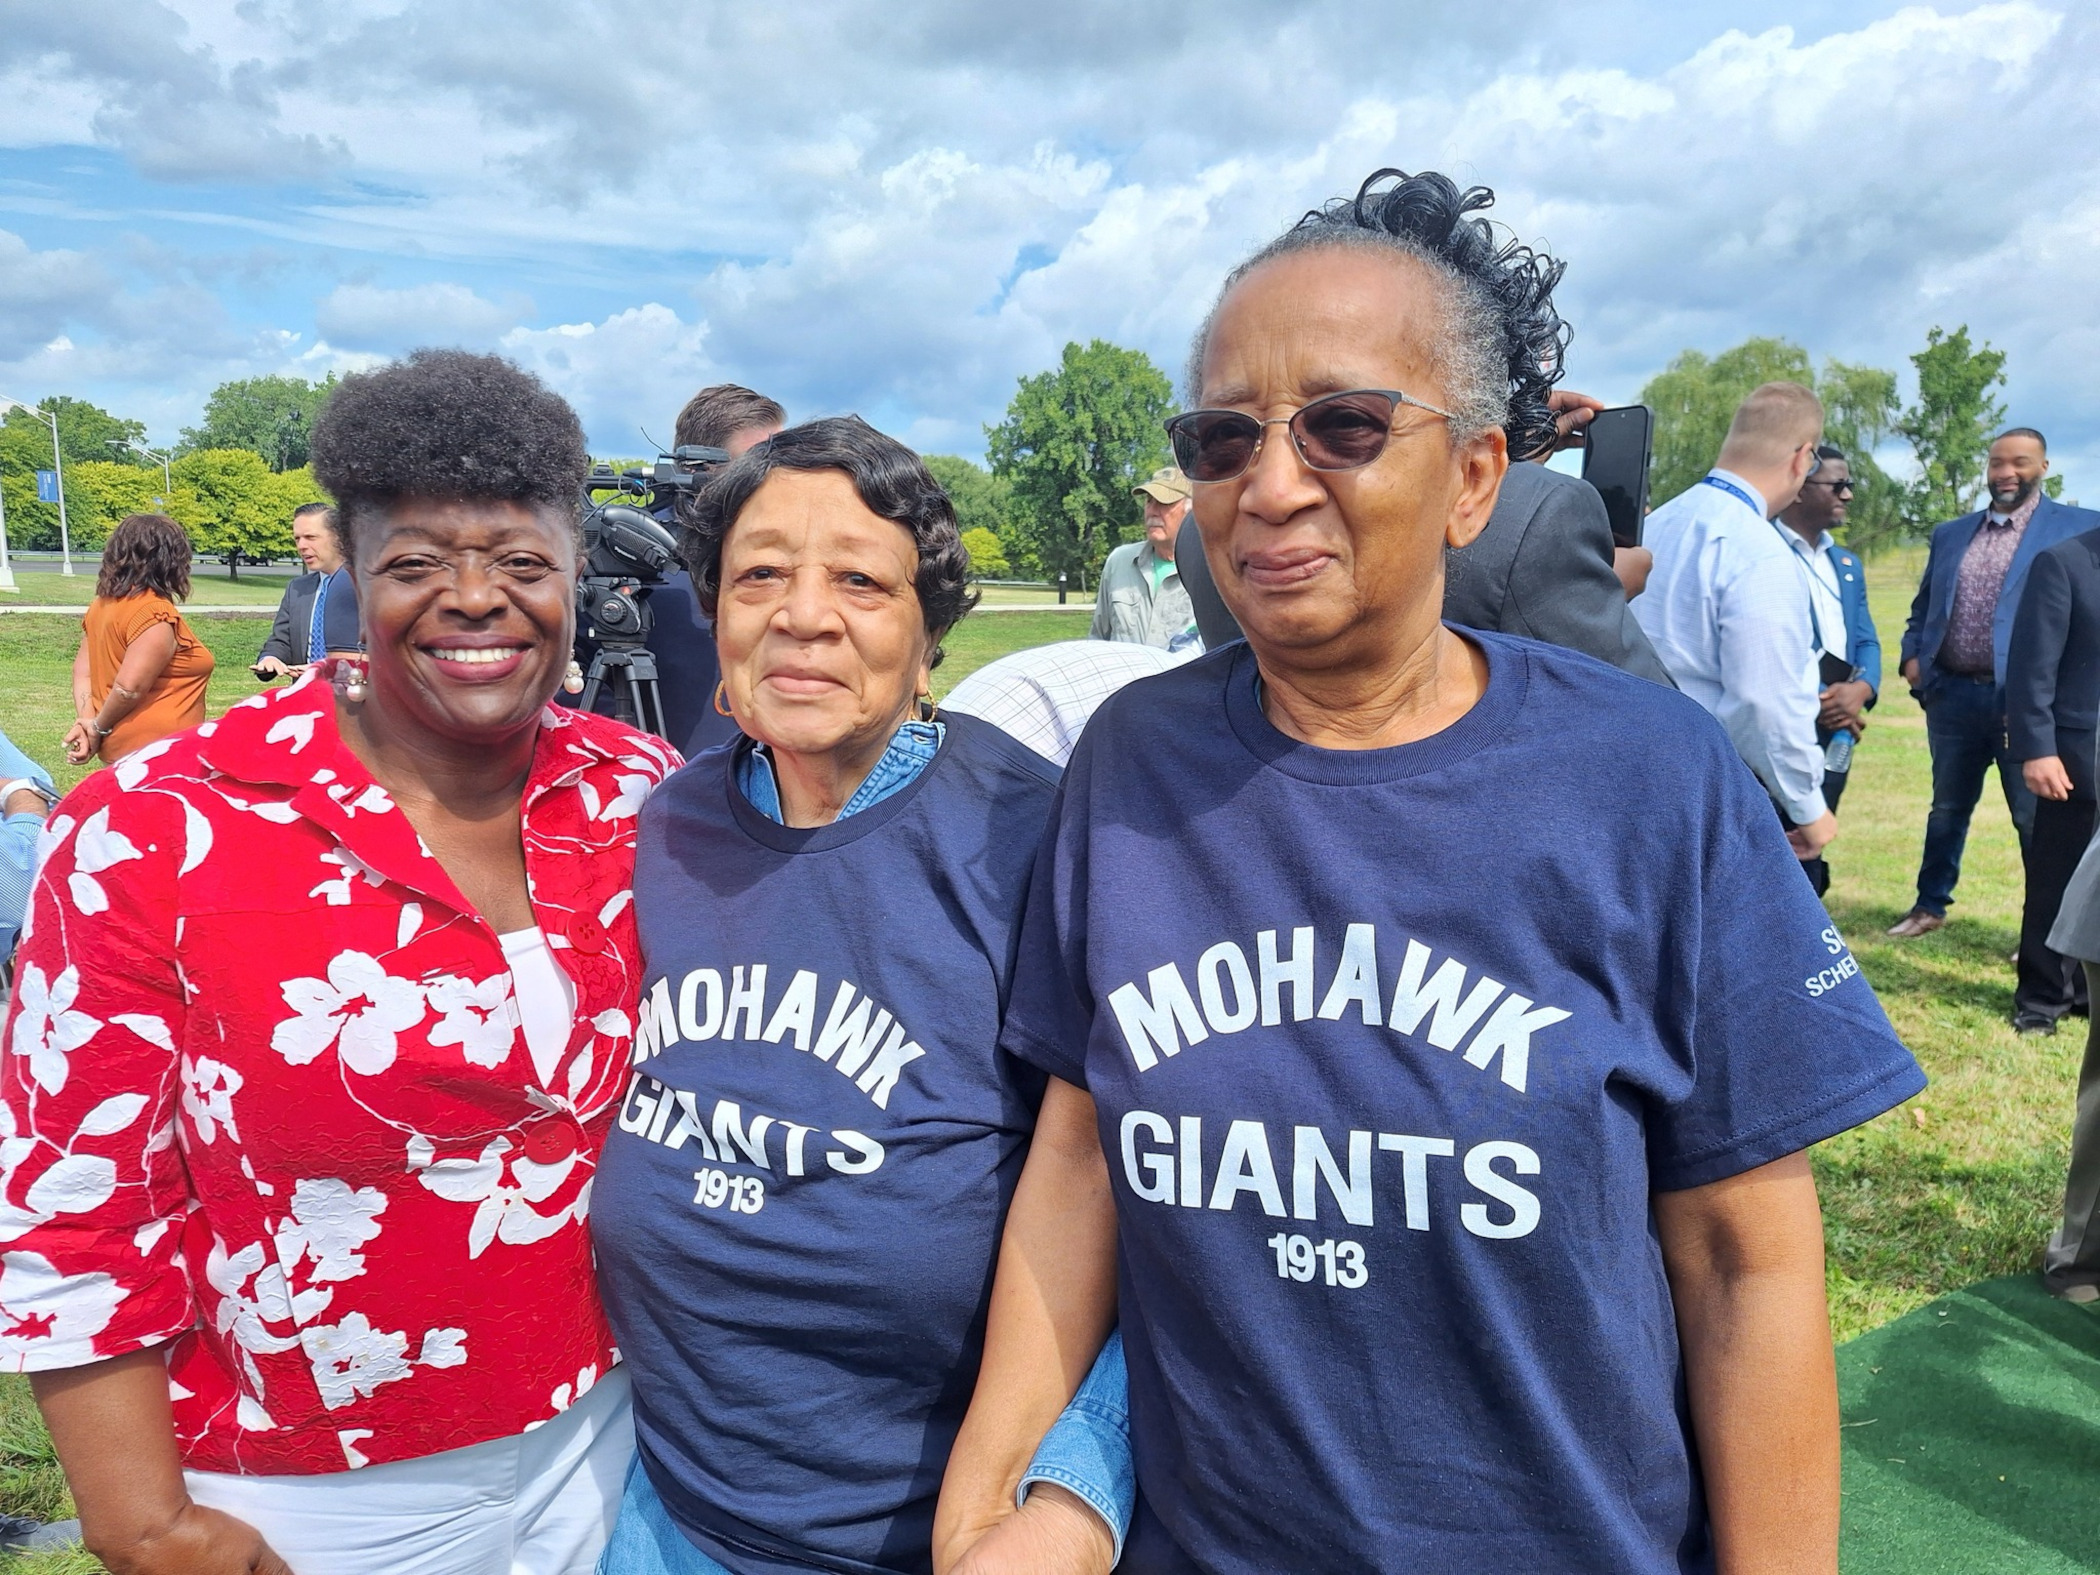 Three audience members wearing "Mohawk Giants" tshirts